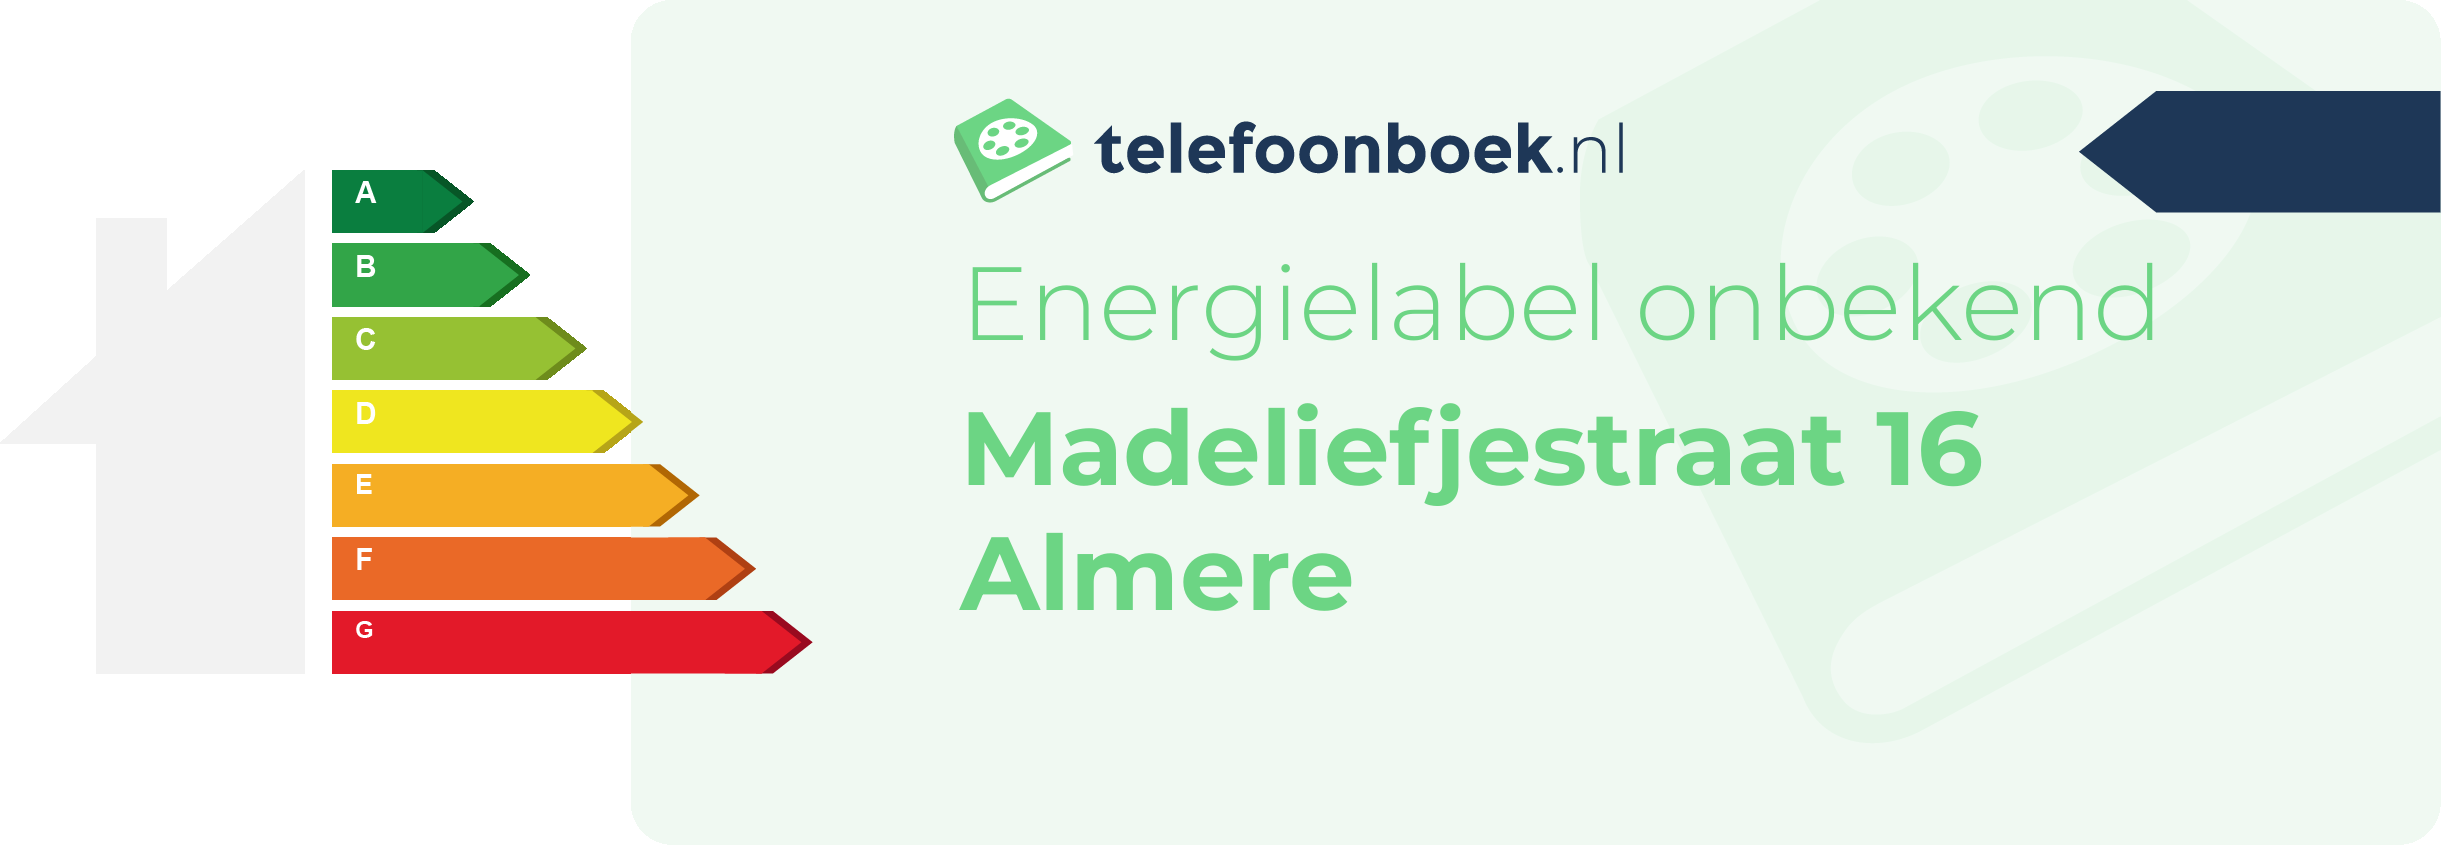 Energielabel Madeliefjestraat 16 Almere